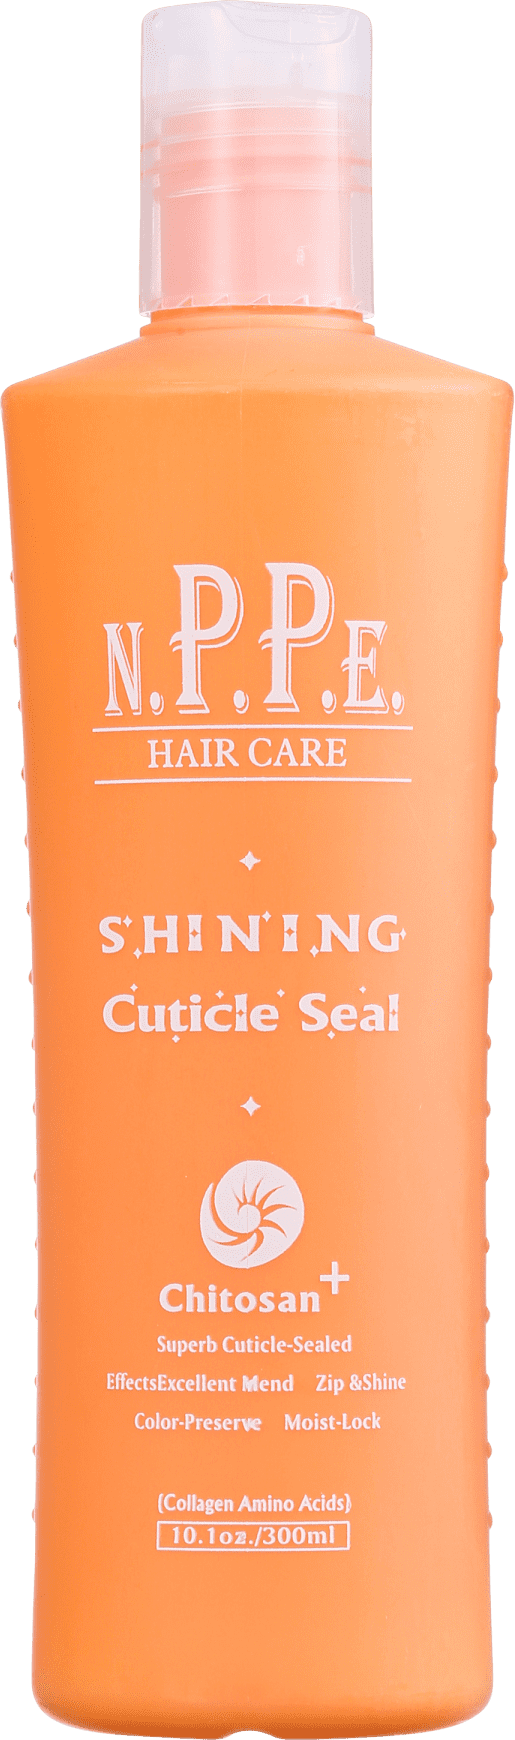 0652418400127 - SHINING CUTICLE SEAL NPPE - CREME PARA PENTEAR - 300ML